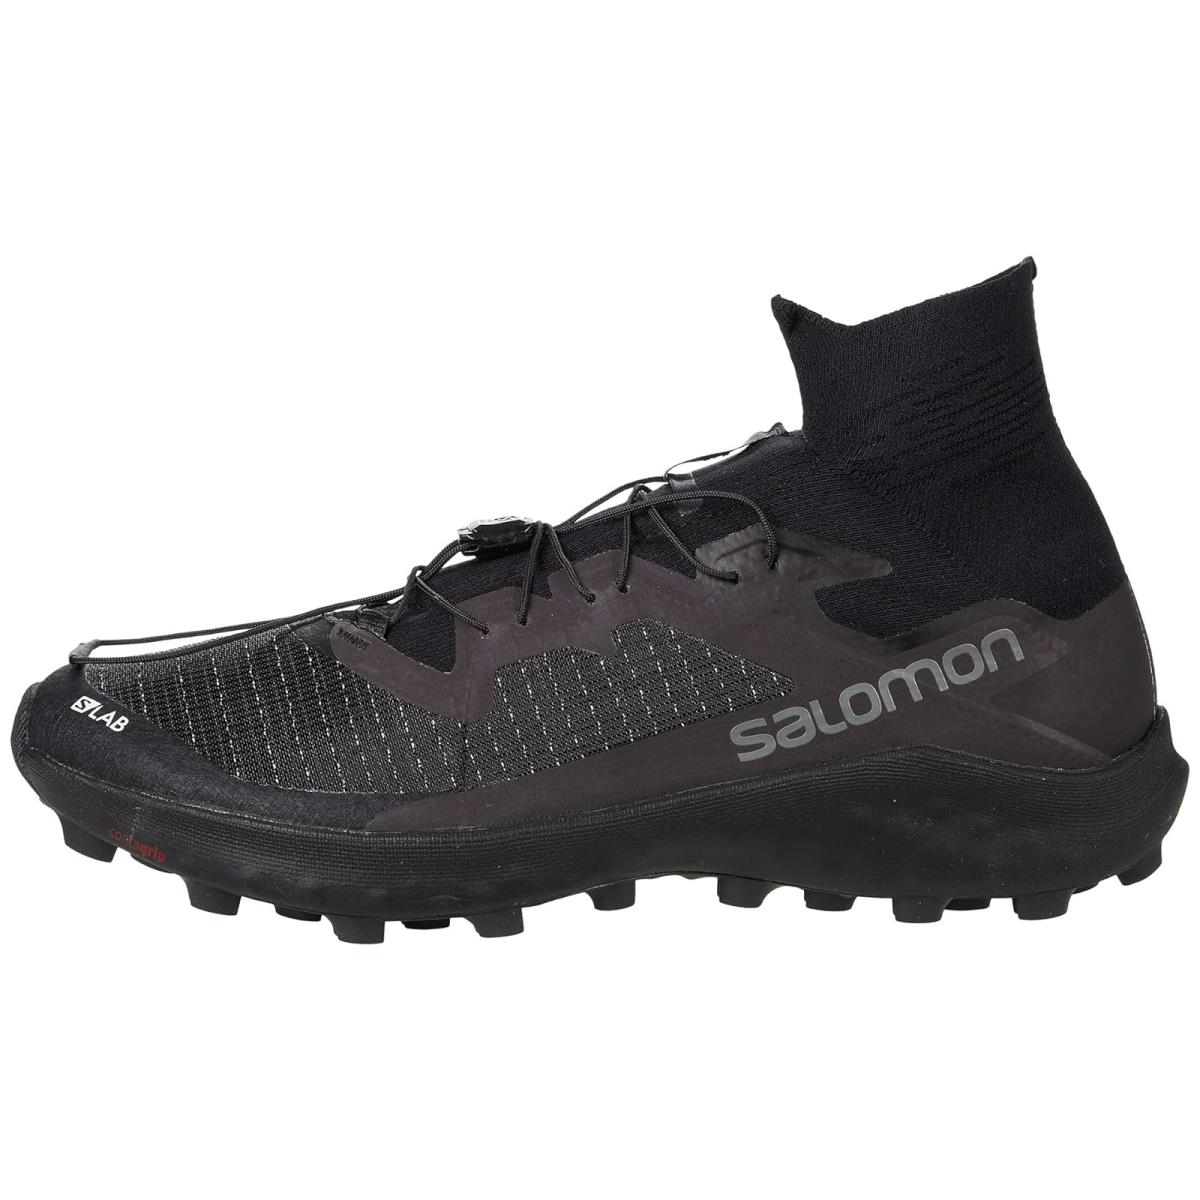 Salomon shoes  - Black/Black/Black 2